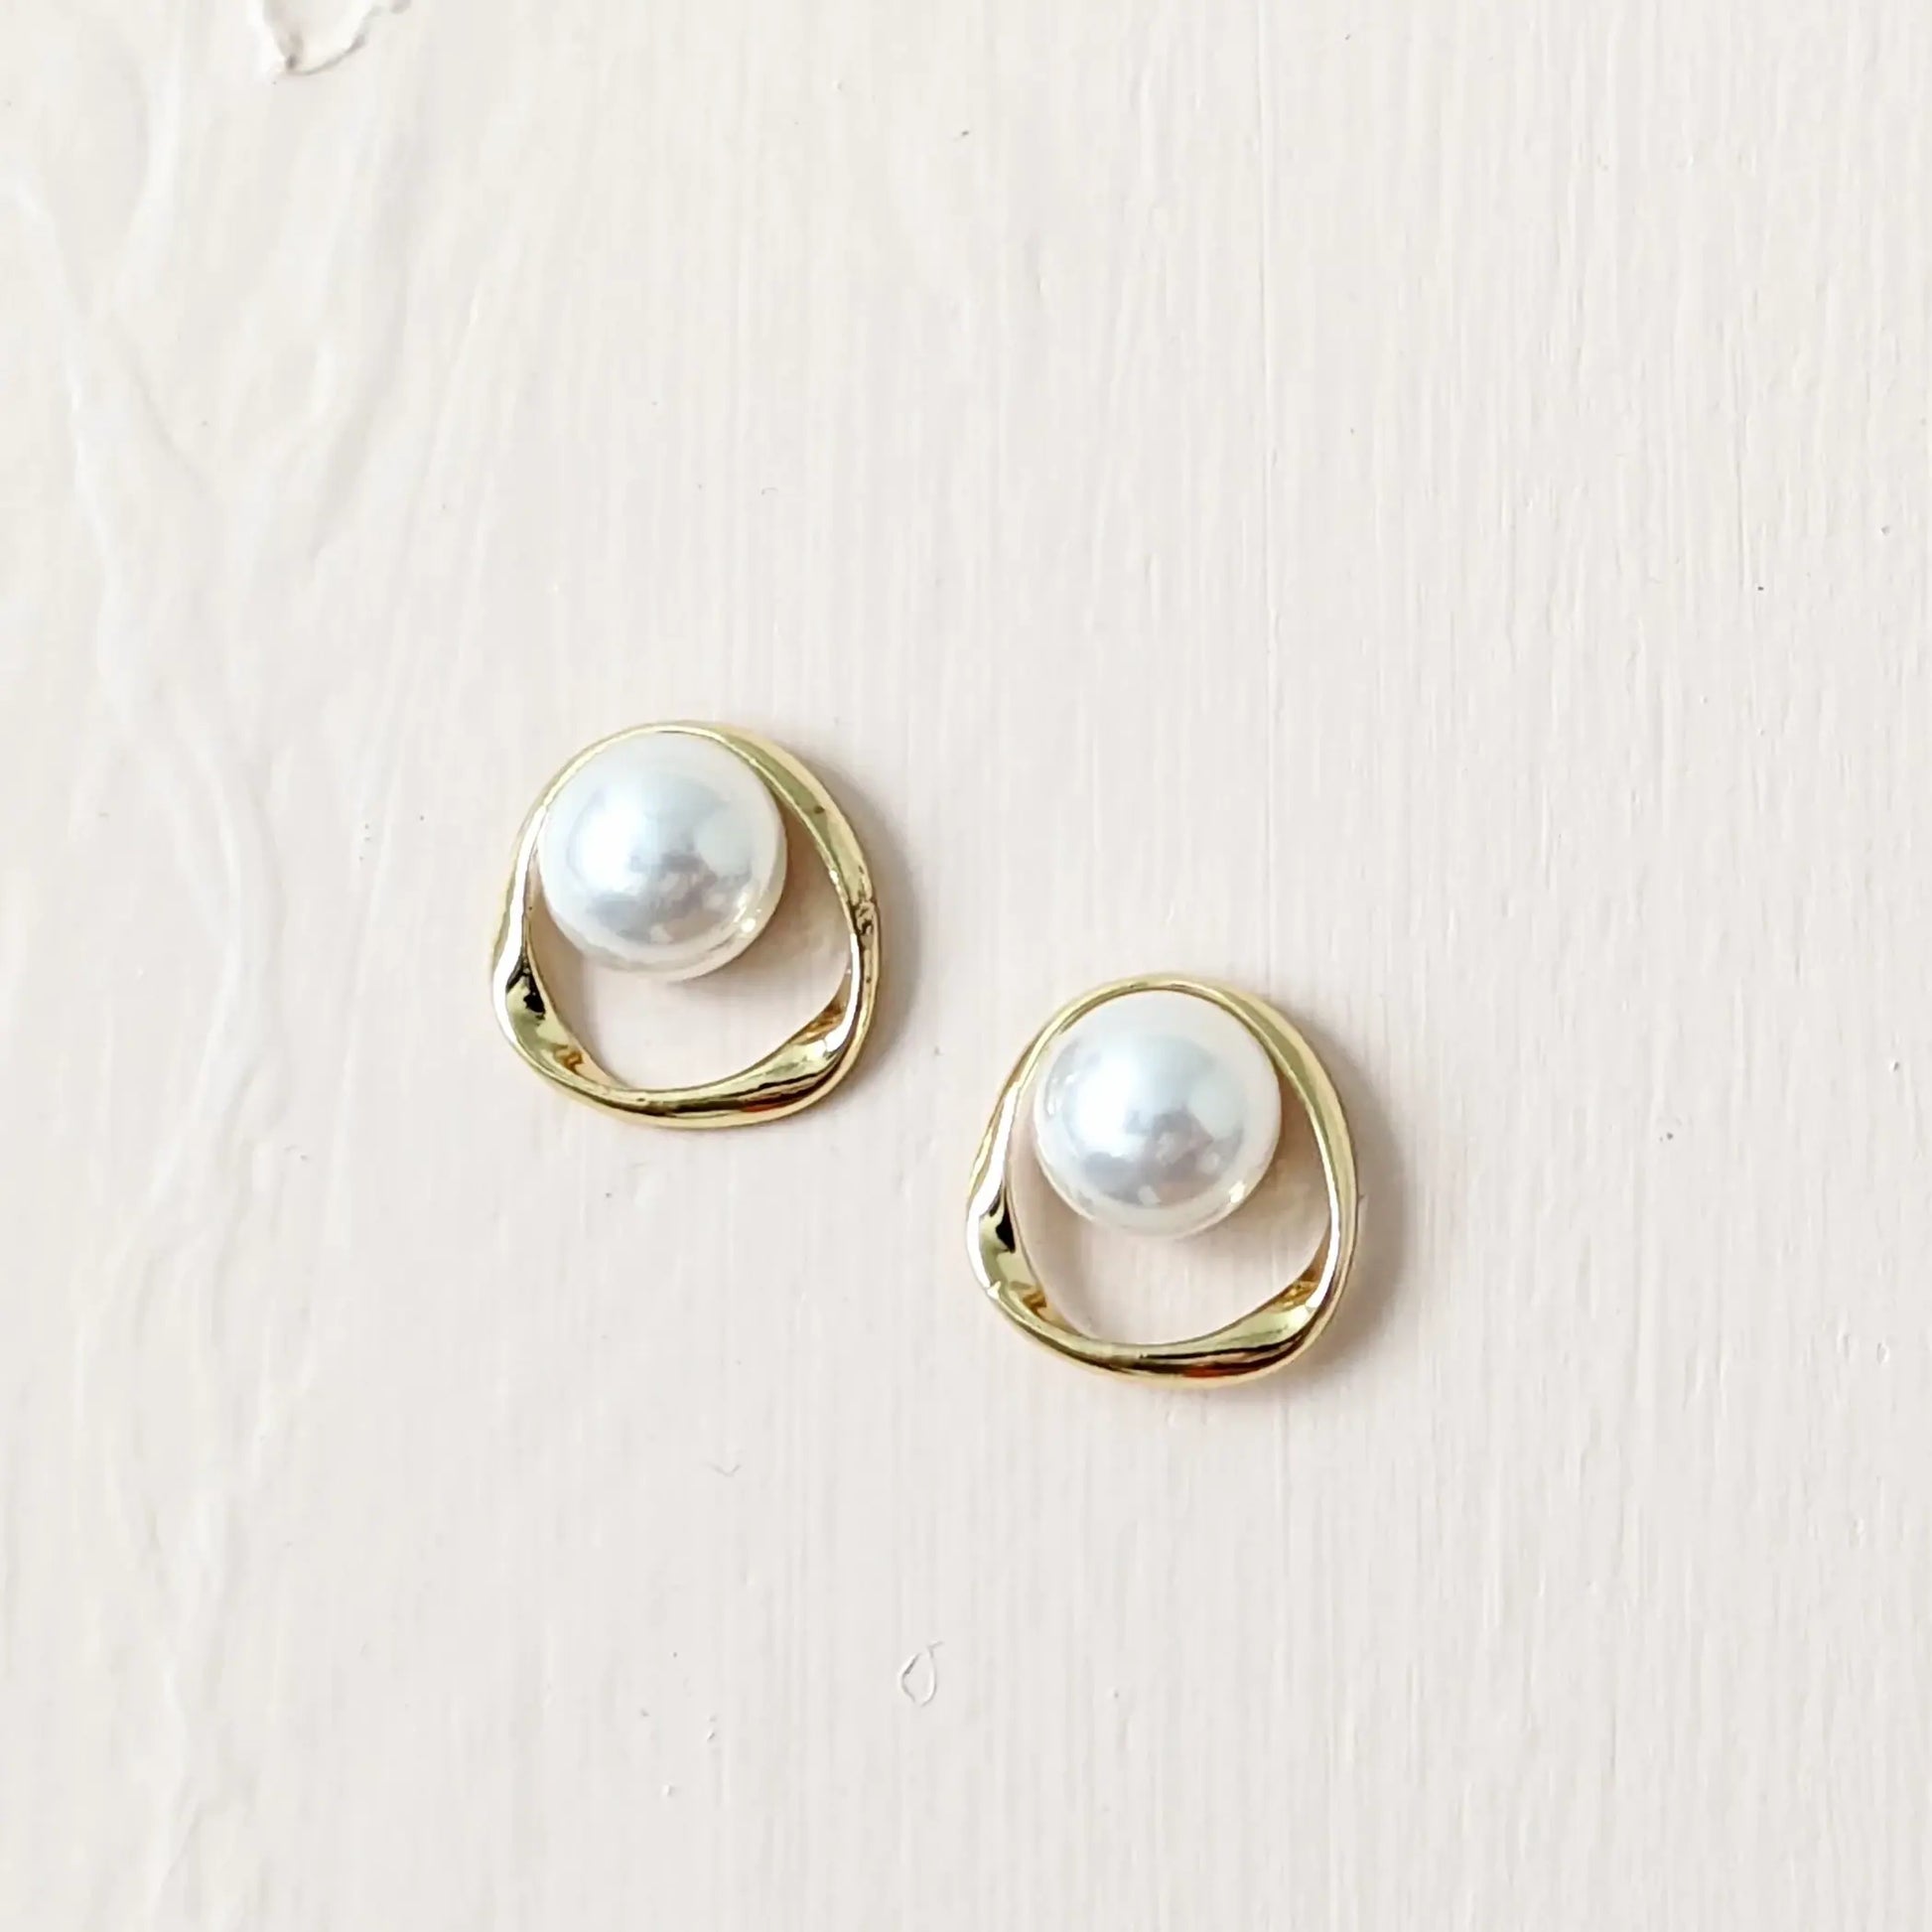 How to choose nice pearl earrings design - Quora